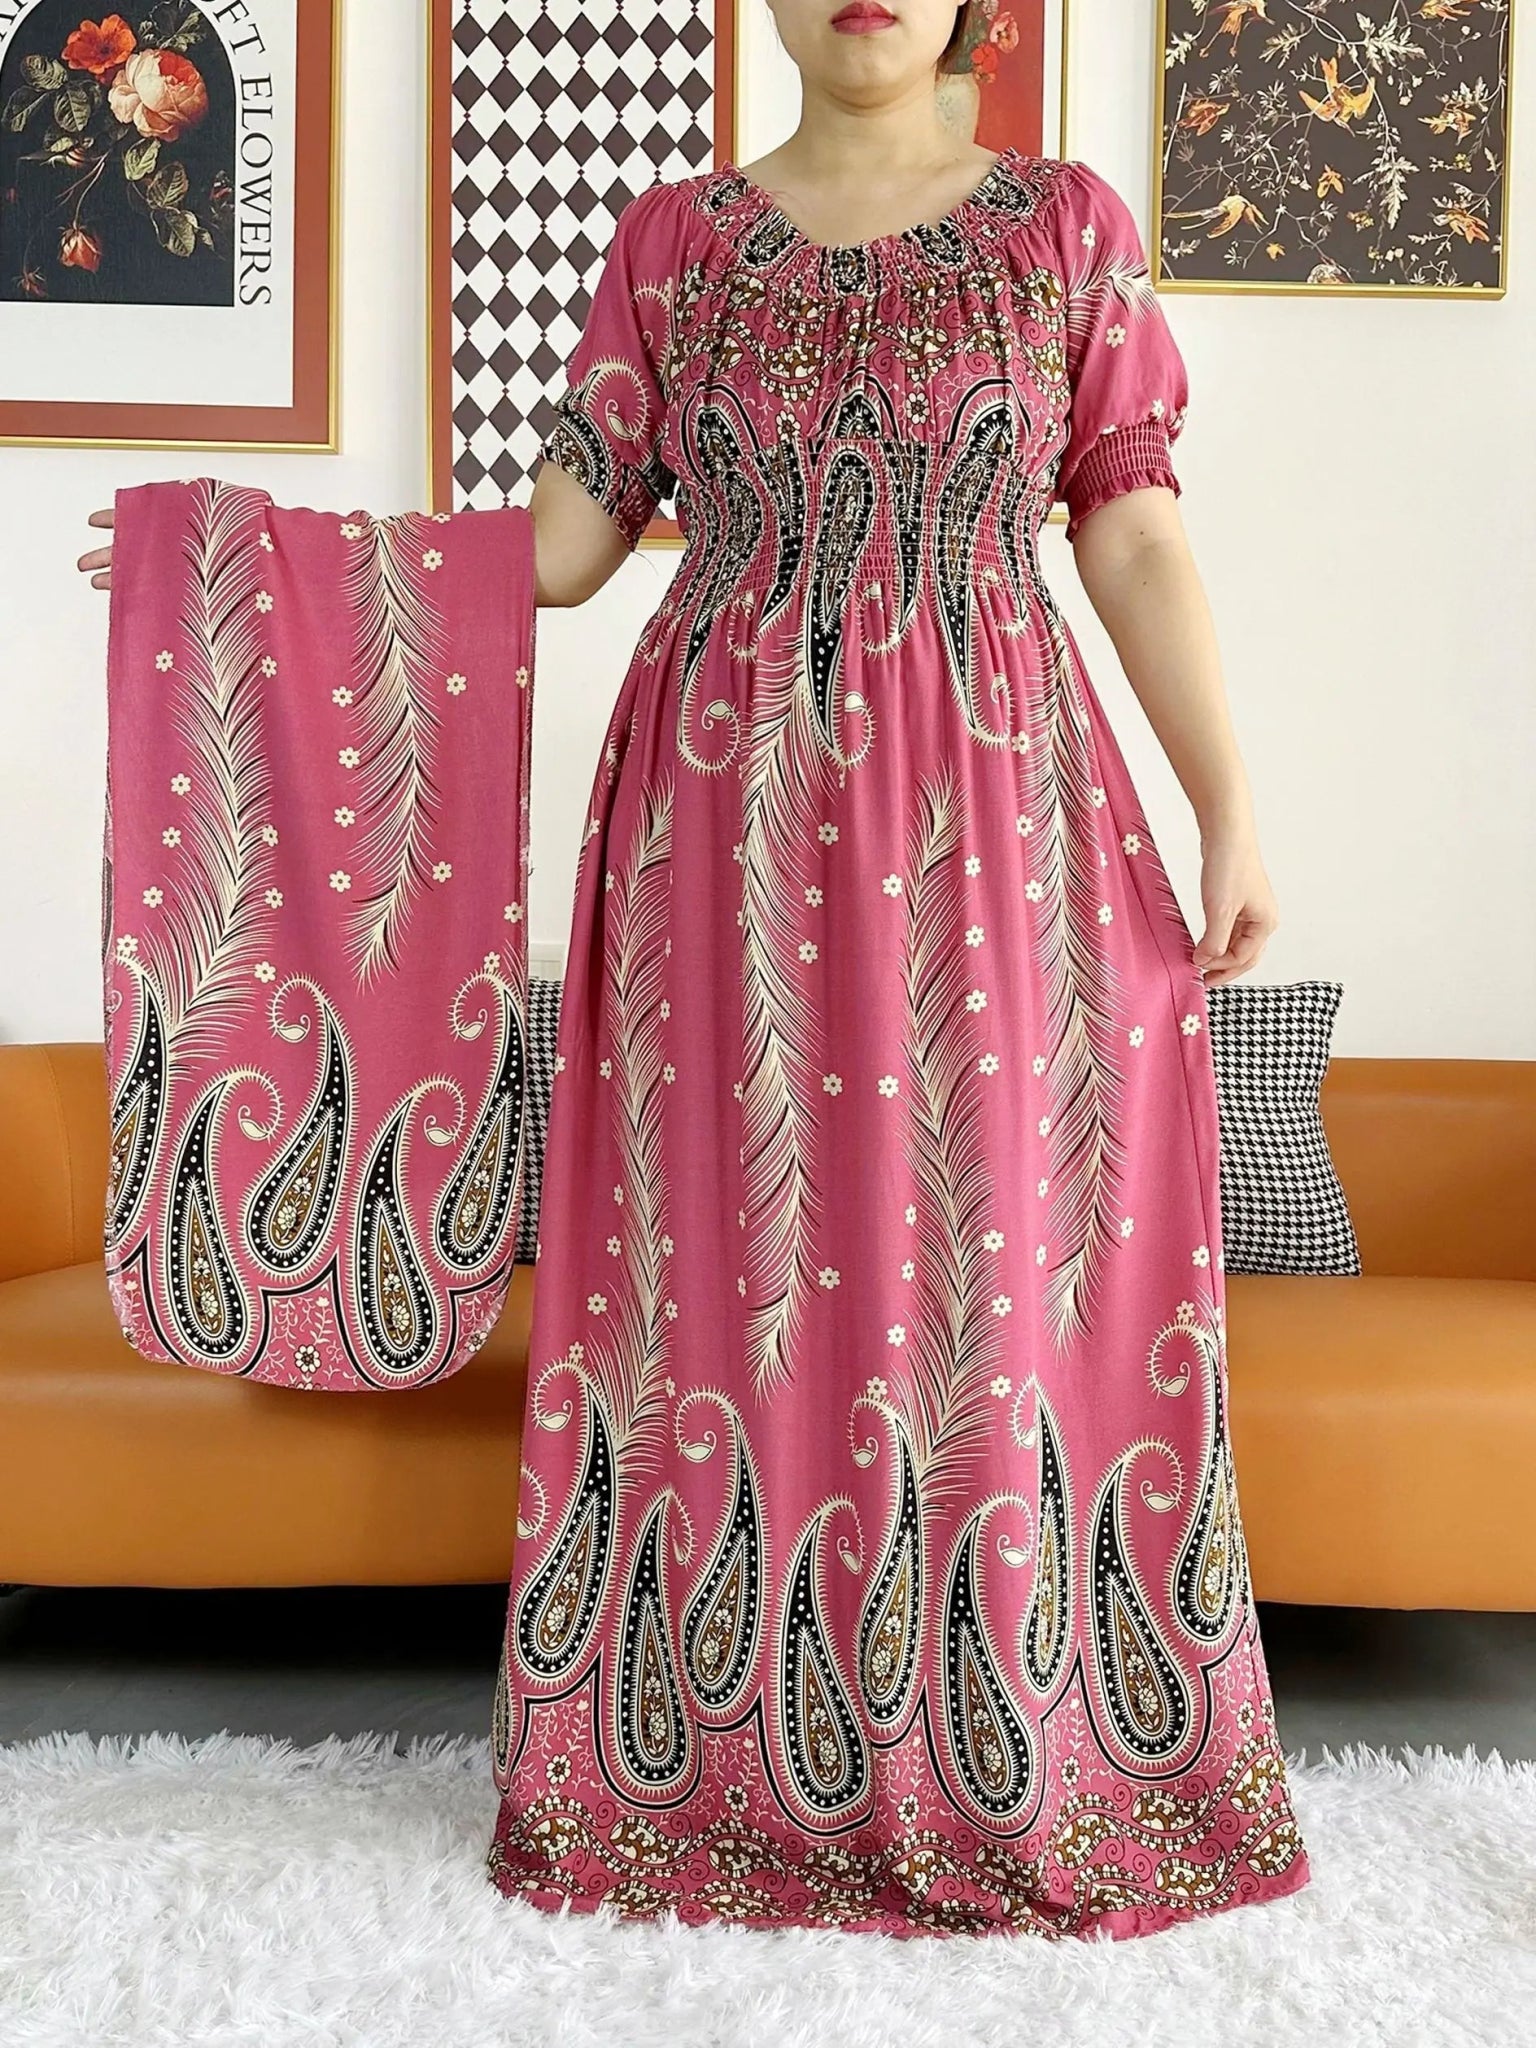 Floral Elegance: Dashiki Inspired Short Sleeve Dress for African Women - 100% Cotton - Flexi Africa - www.flexiafrica.com